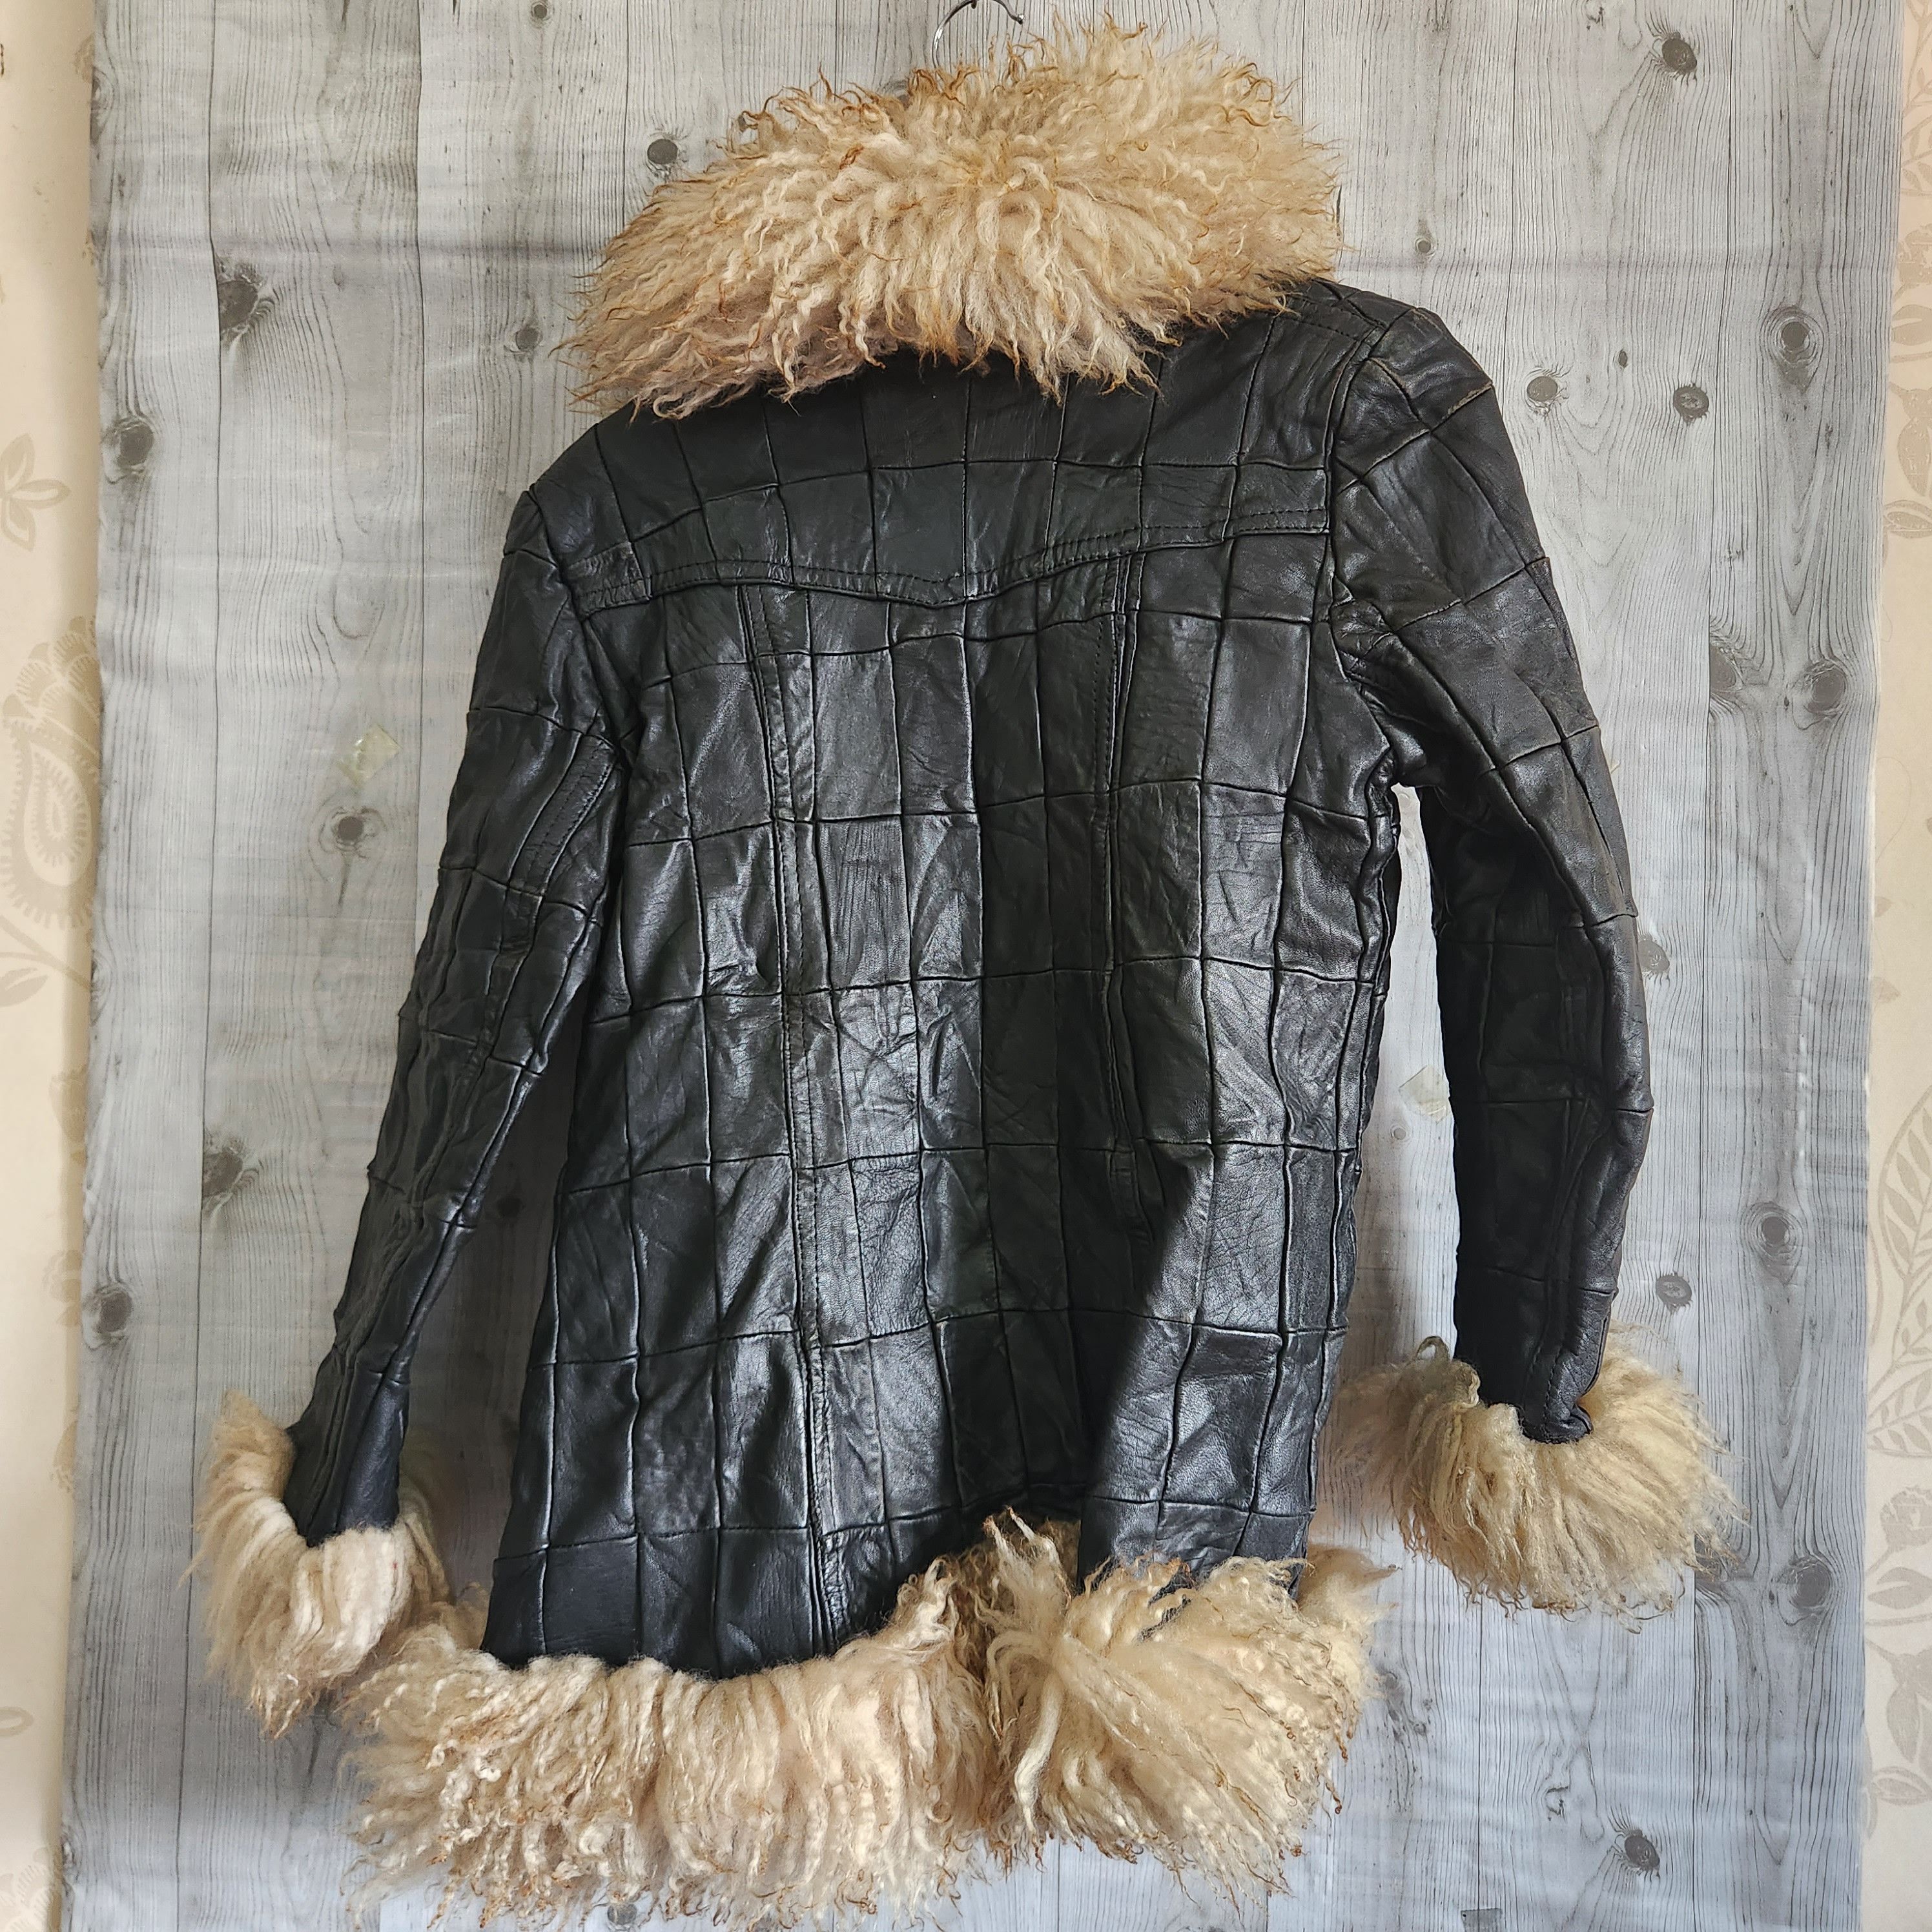 Grails Vintage Patches Genuine Leather Fur Jacket - 8